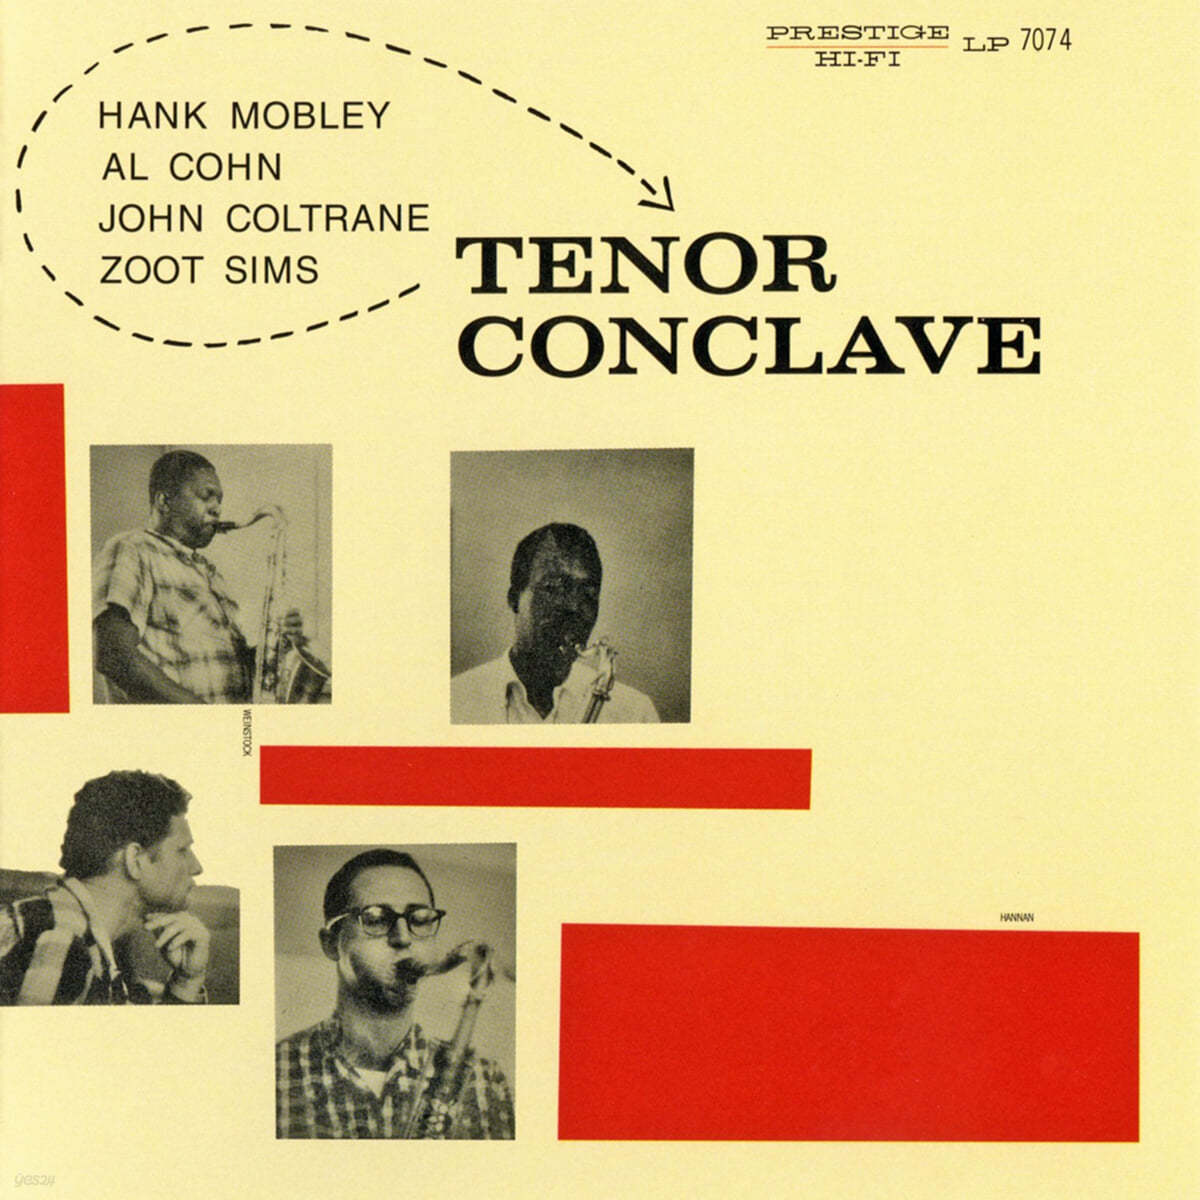 Hank Mobley / Al Cohn / John Coltrane / Zoot Sims (행크 모블리 / 앨 콘 / 존 콜트레인 / 주트 심즈) - Tenor Conclave 